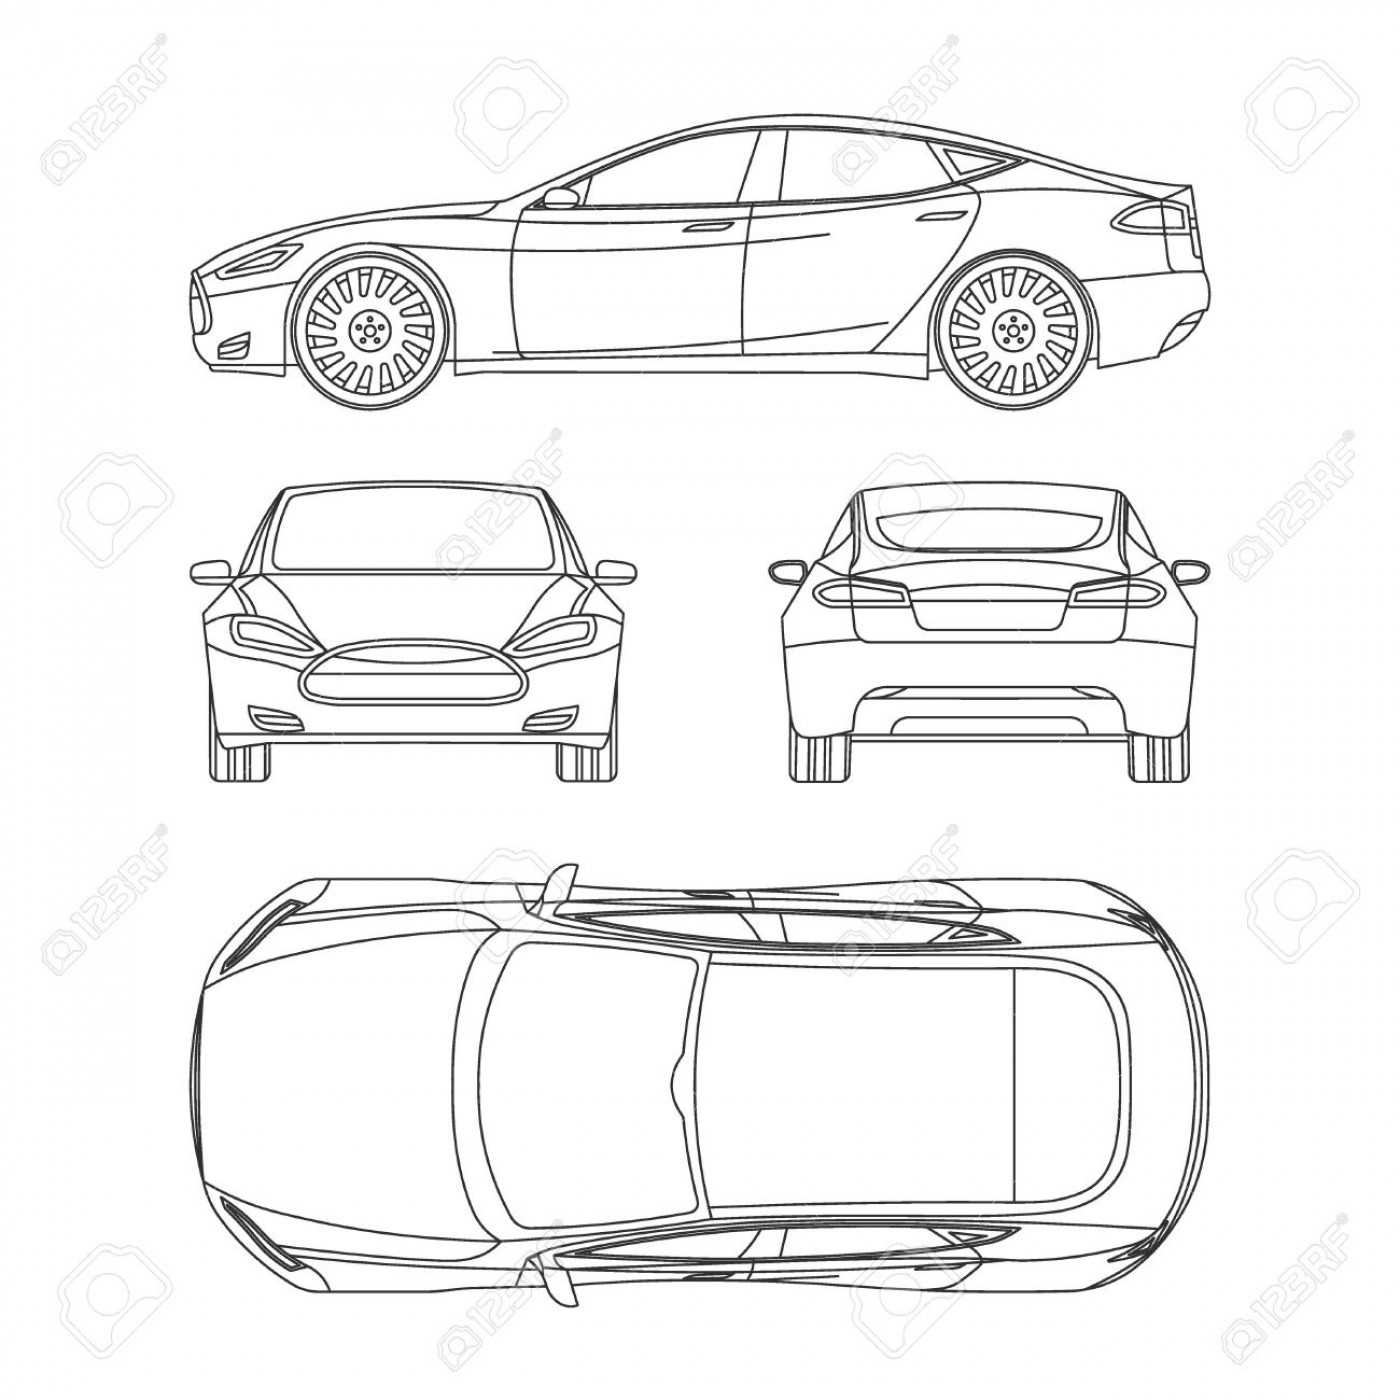 012 Template Ideas Vehicle Condition Report Car Line Draw Regarding Car Damage Report Template